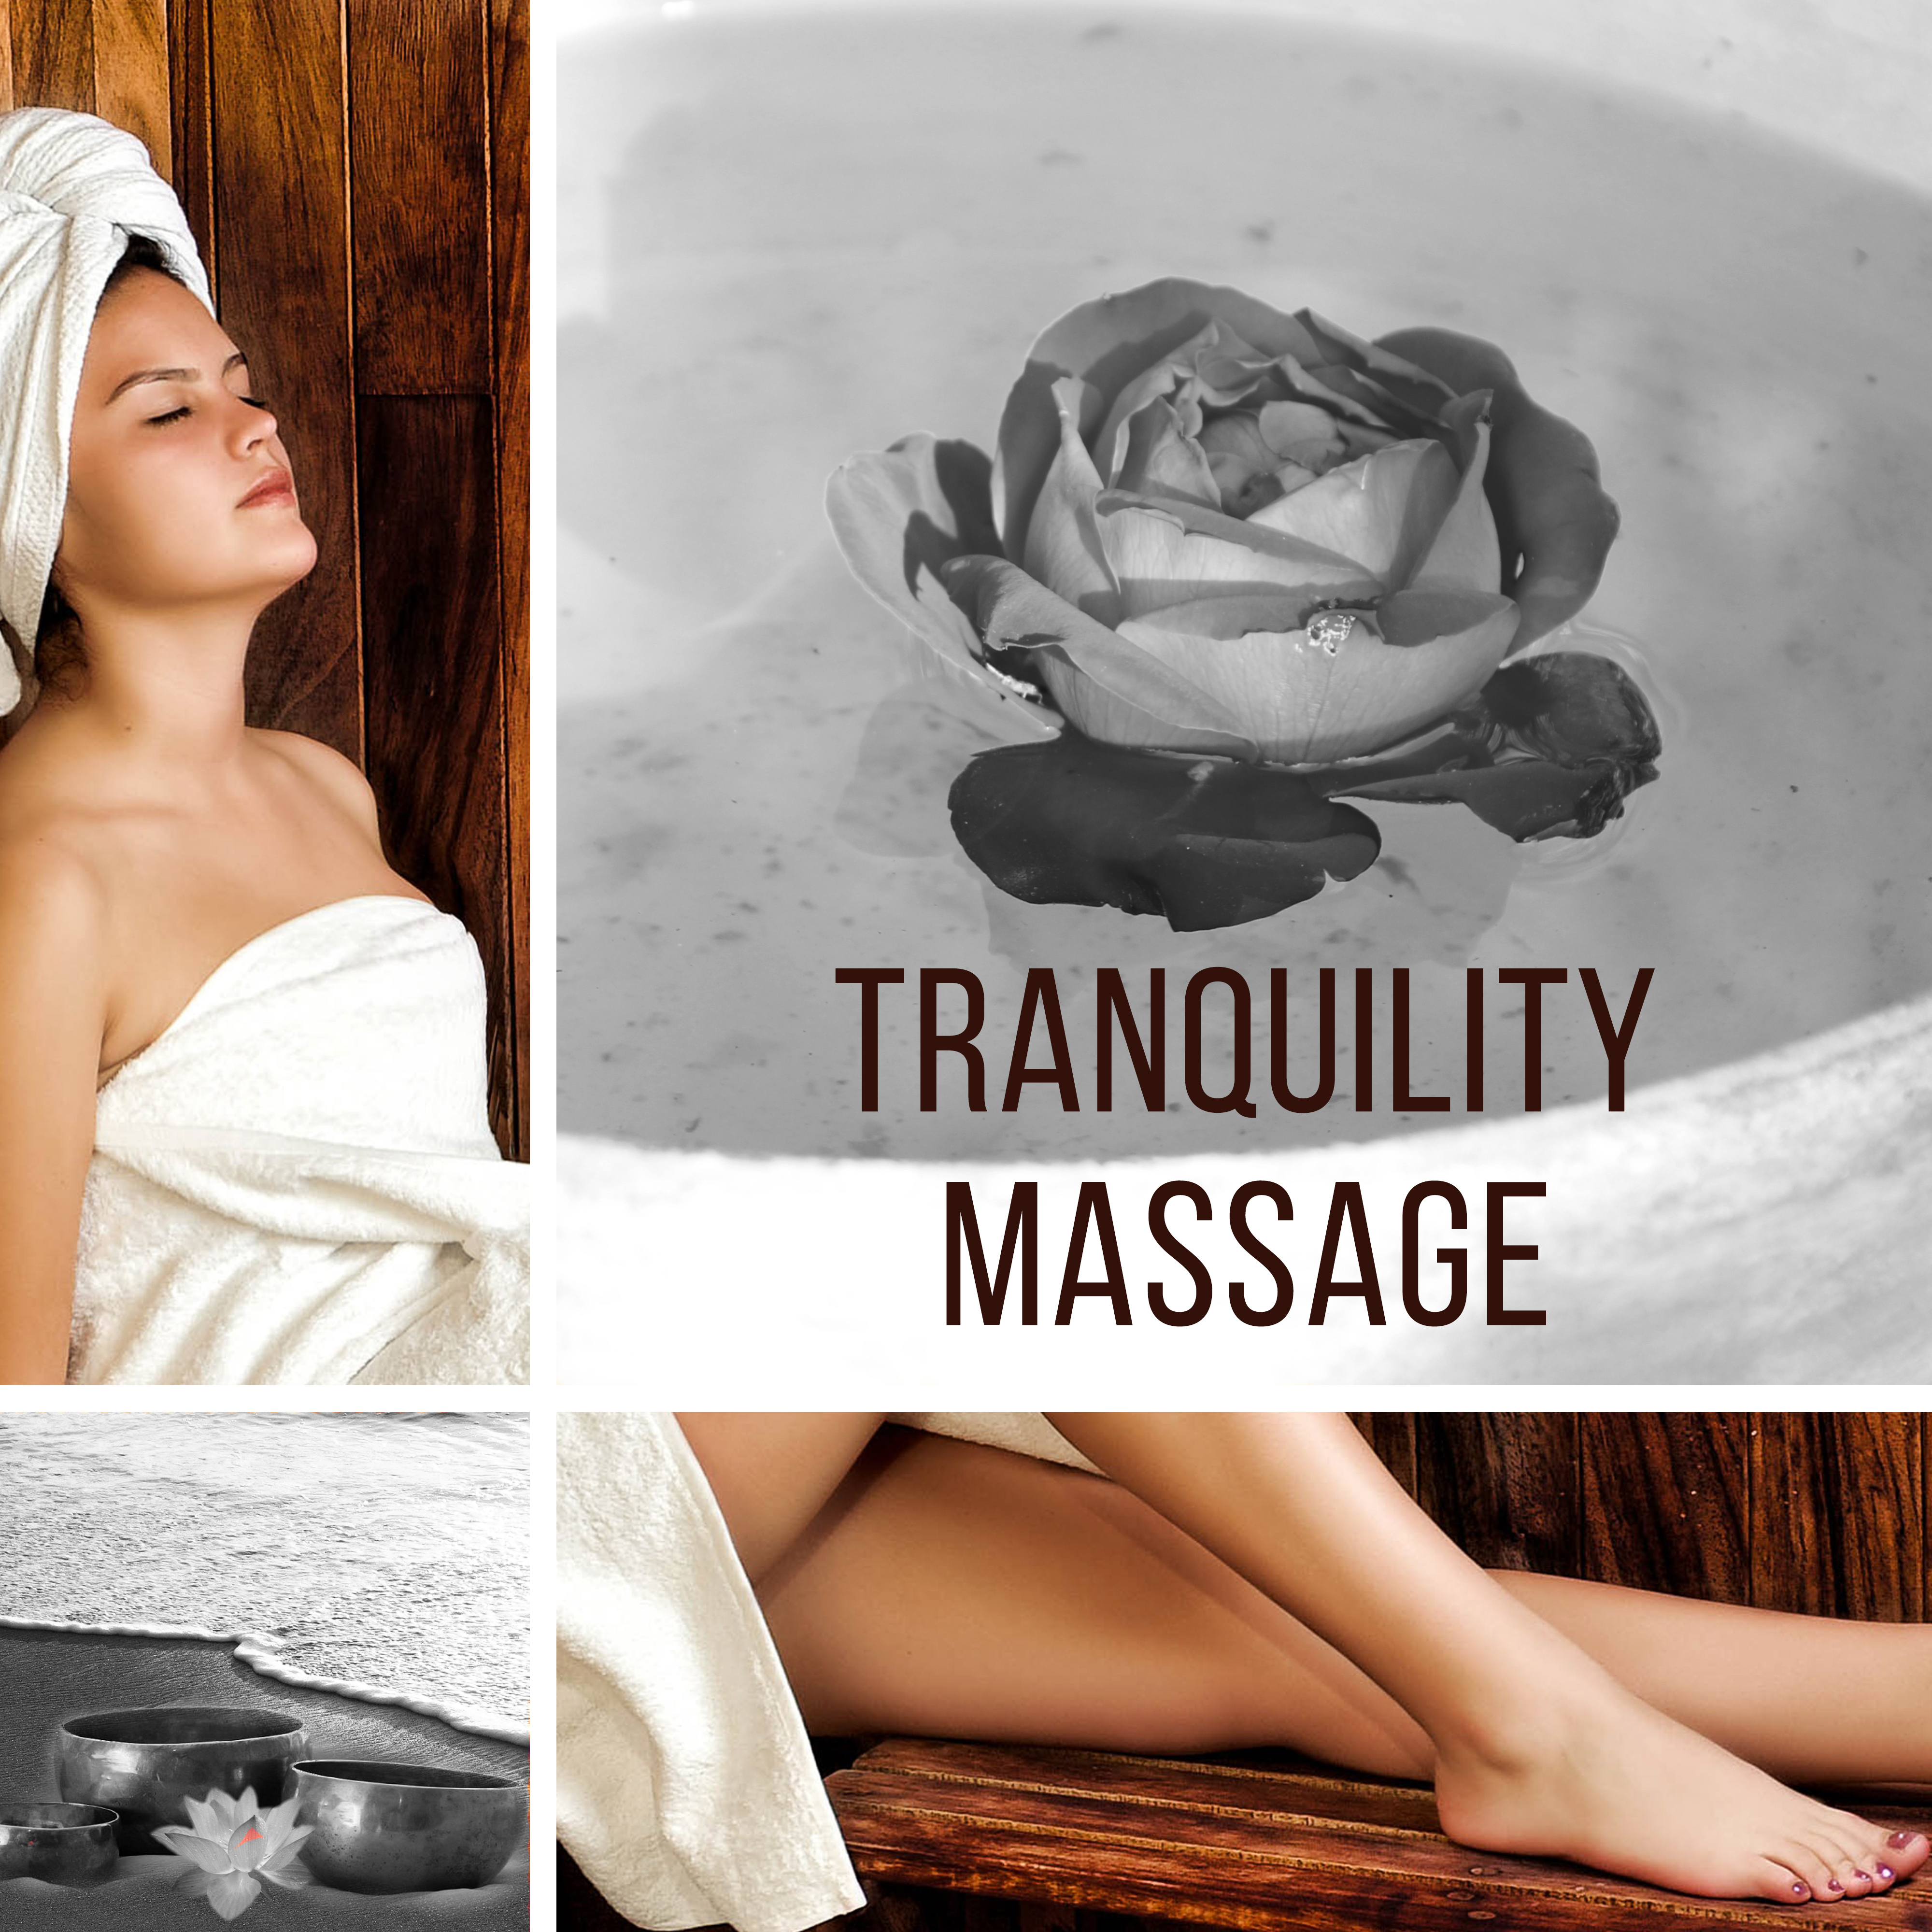 Tranquility Massage - Ocean Sounds, Peace Music, Reiki Healing, Sea Waves, Erotic Massage Music, Spa